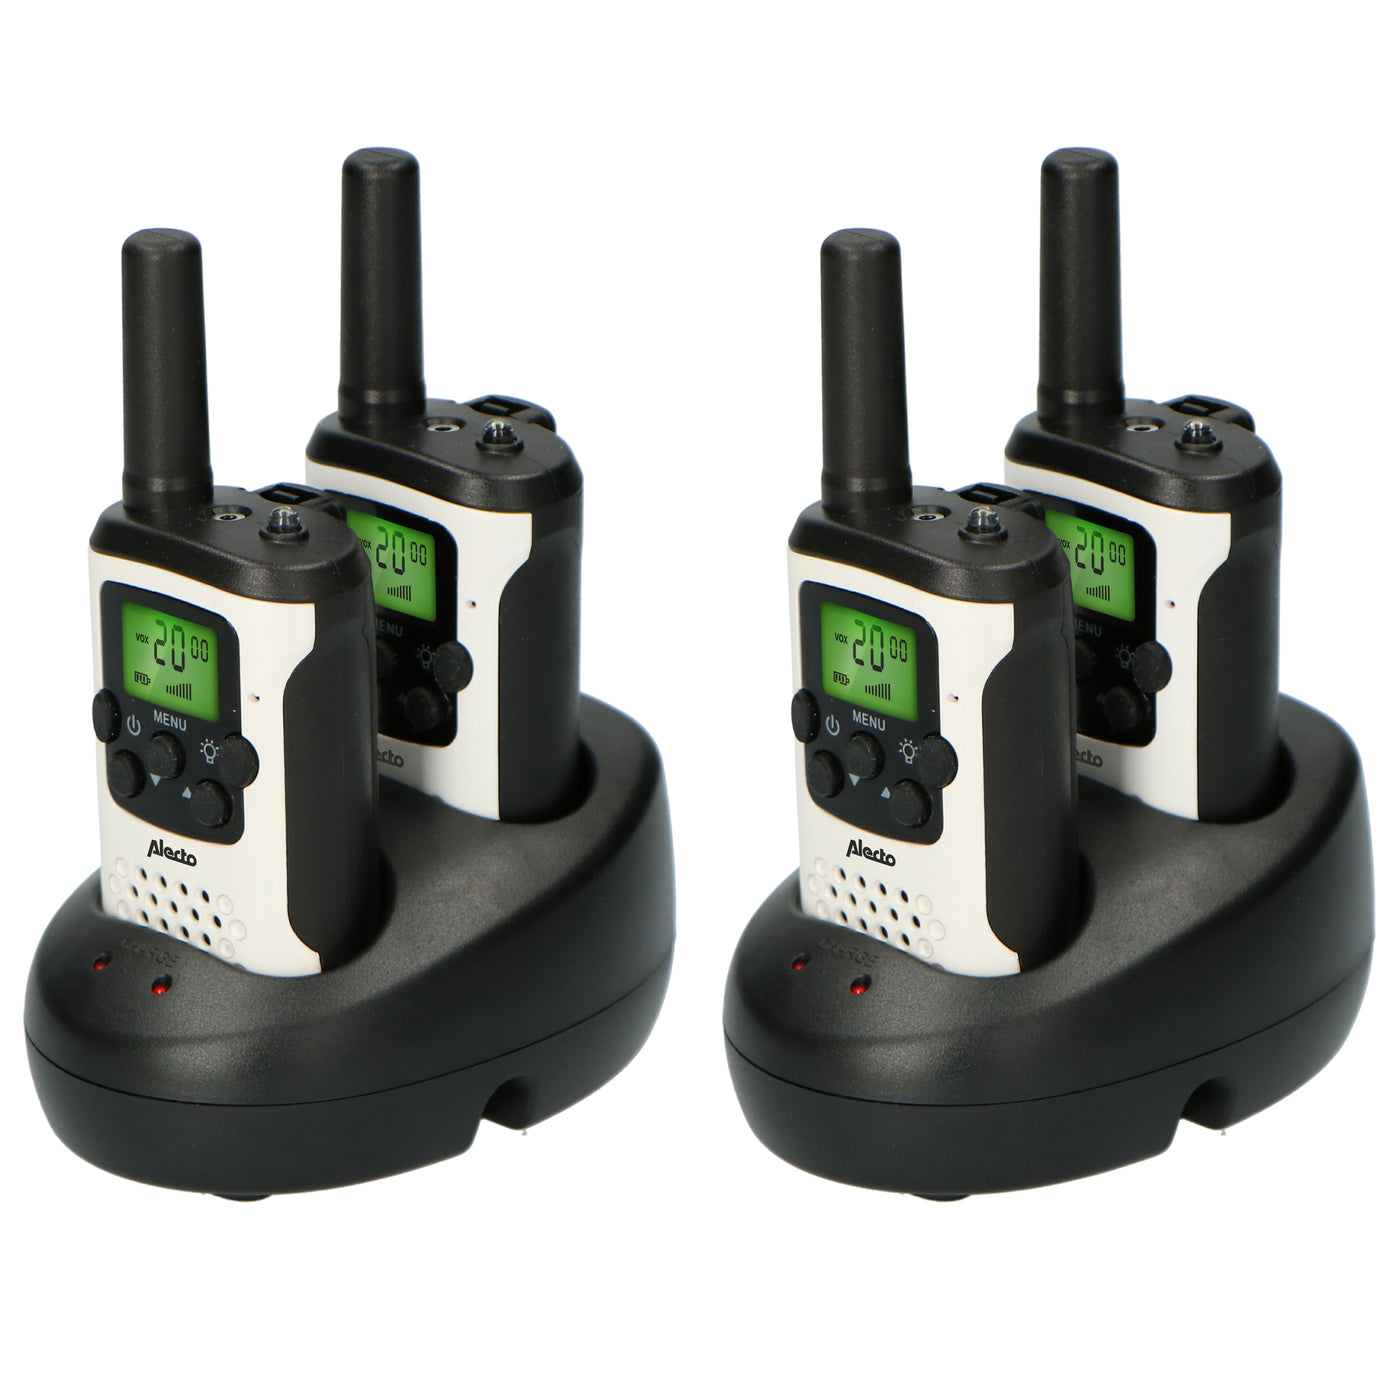 Alecto FR-175 QUADSET - Set van 4 walkie talkies - tot 7 kilometer bereik, wit/zwart